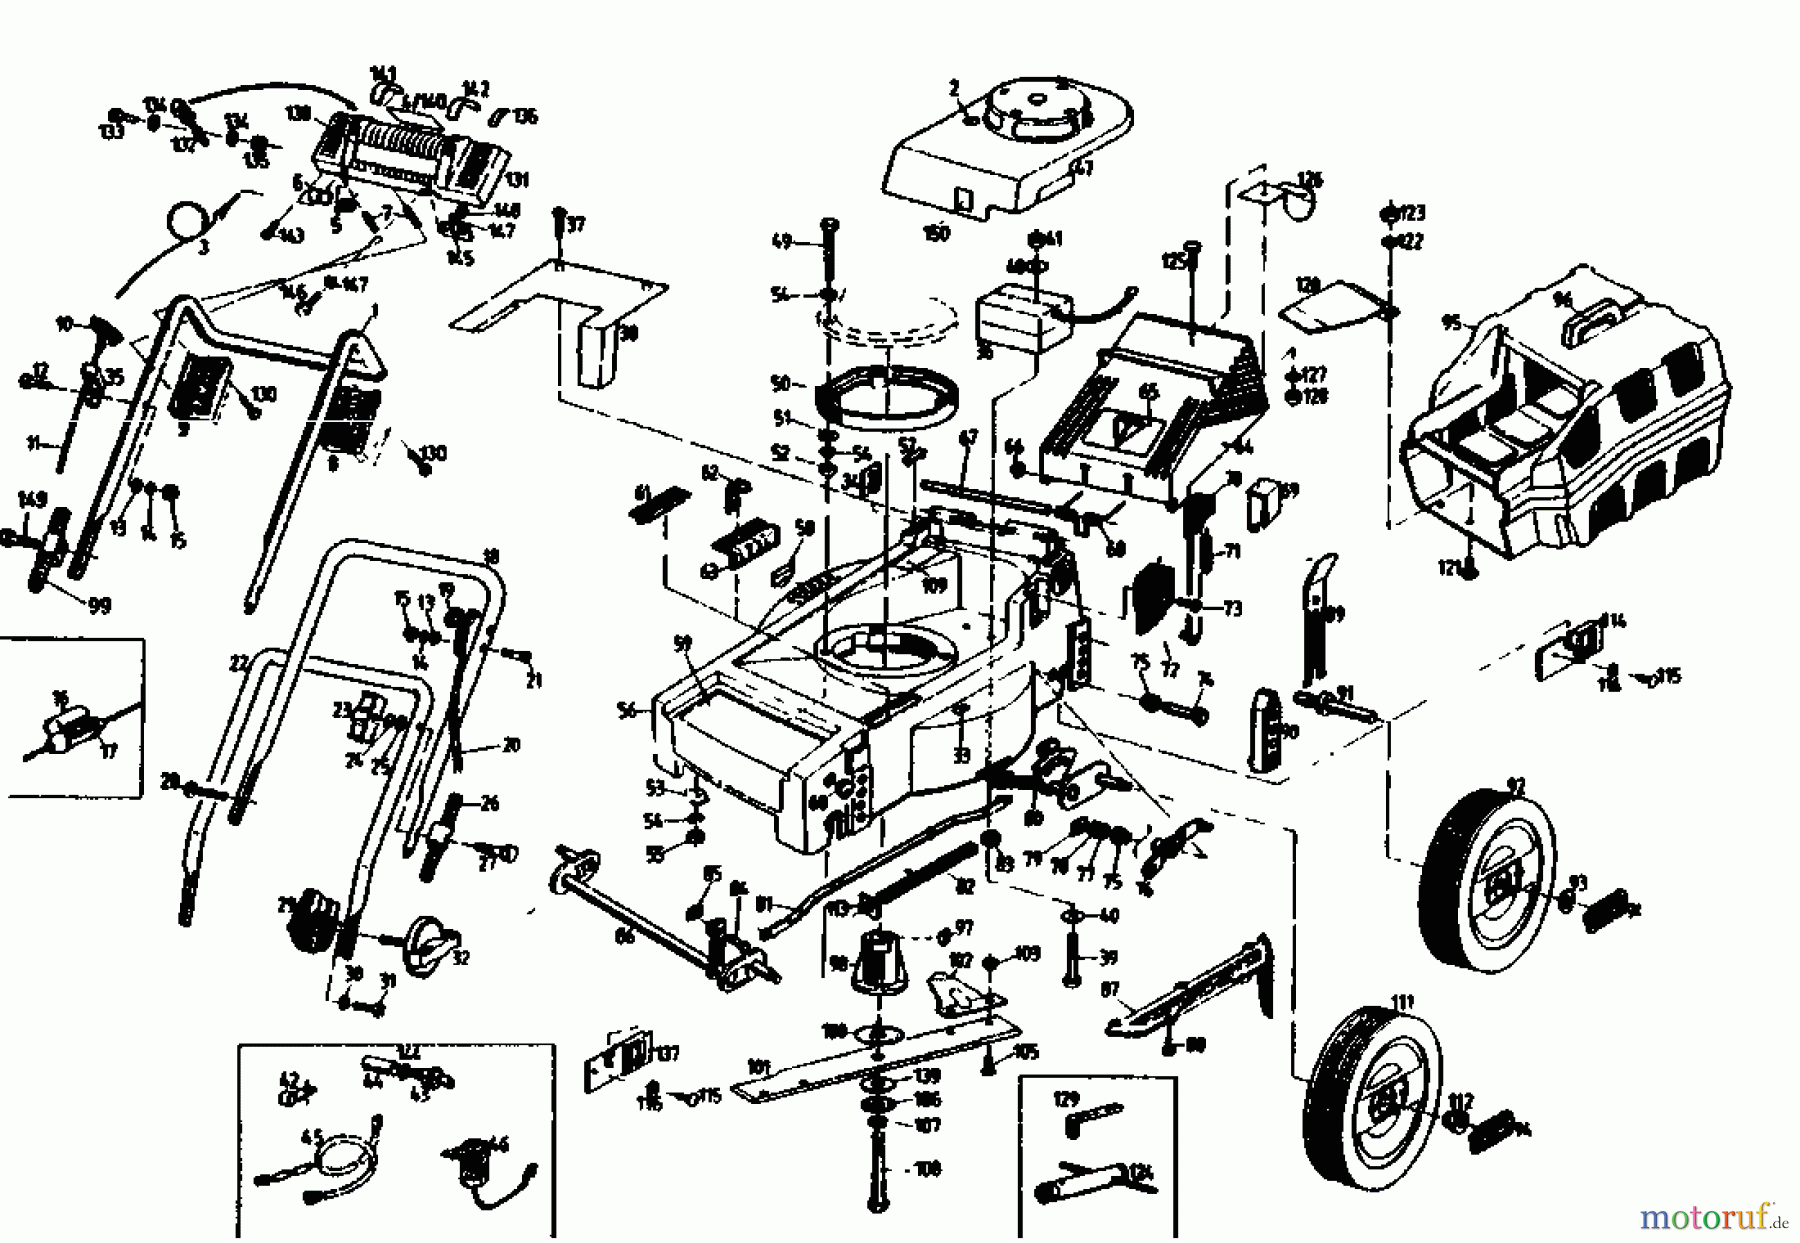  Gutbrod Petrol mower HB 40 L 02896.02  (1991) Basic machine